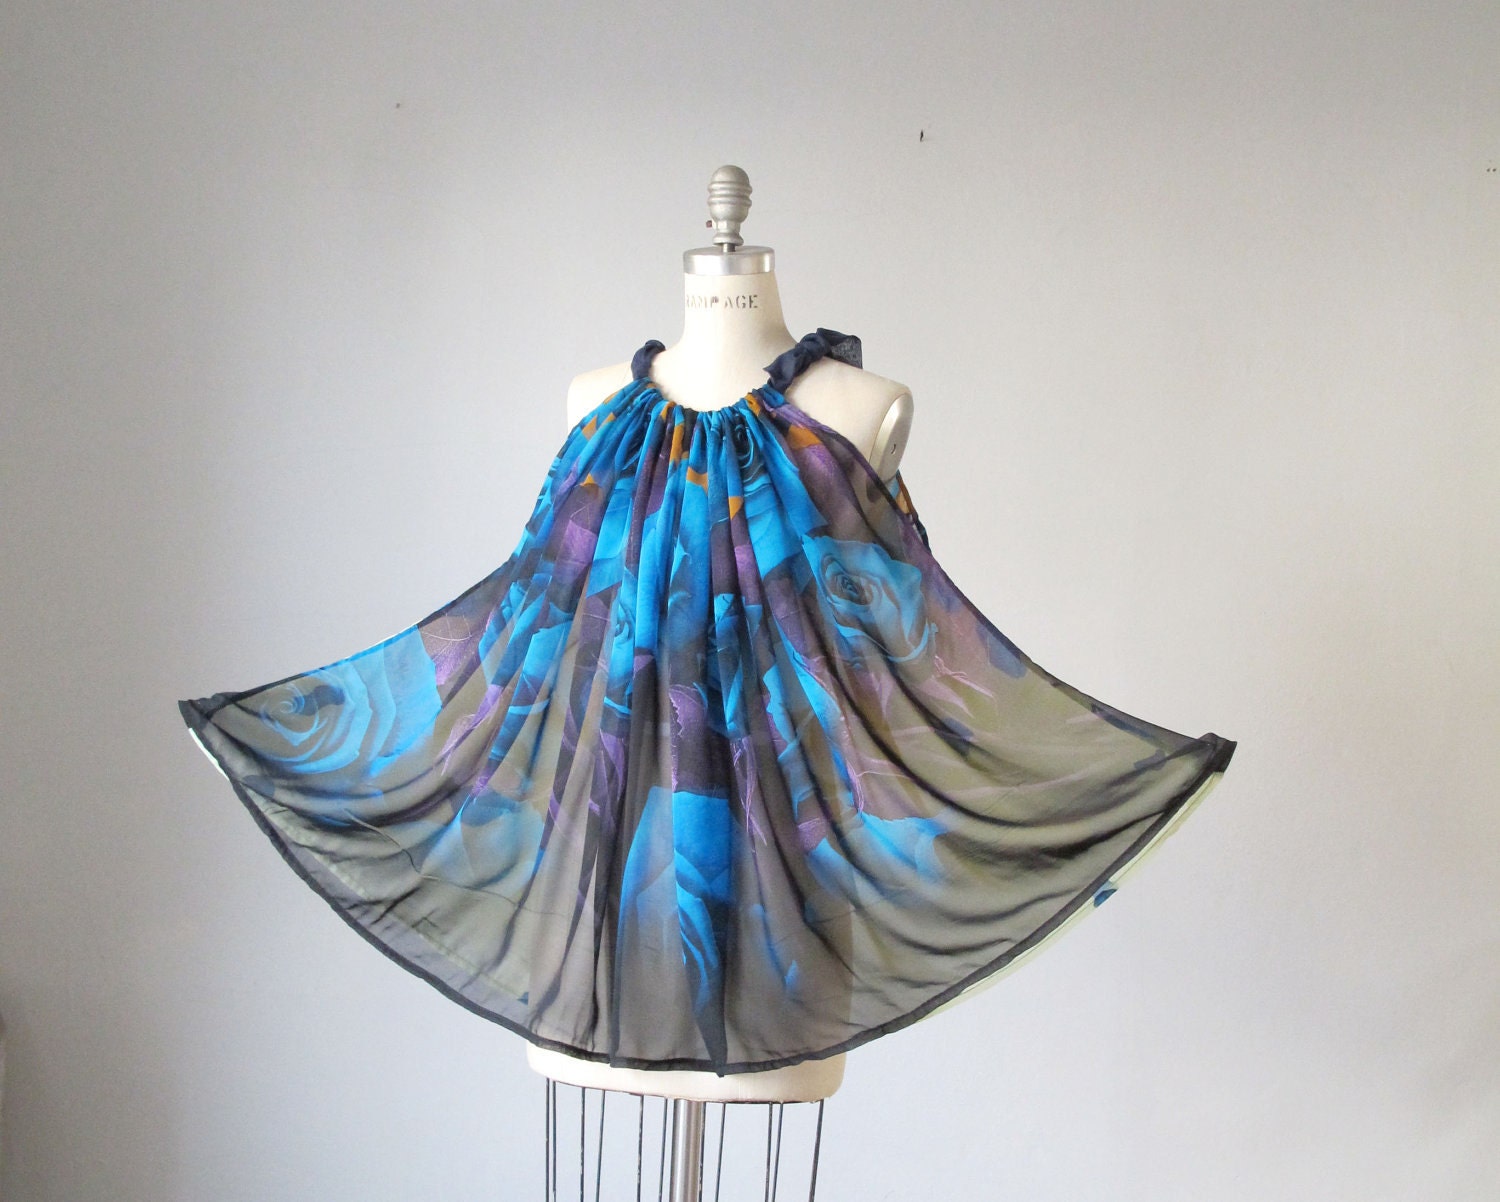 Digital printed silk top / Free style / Roses by AtelierSignature